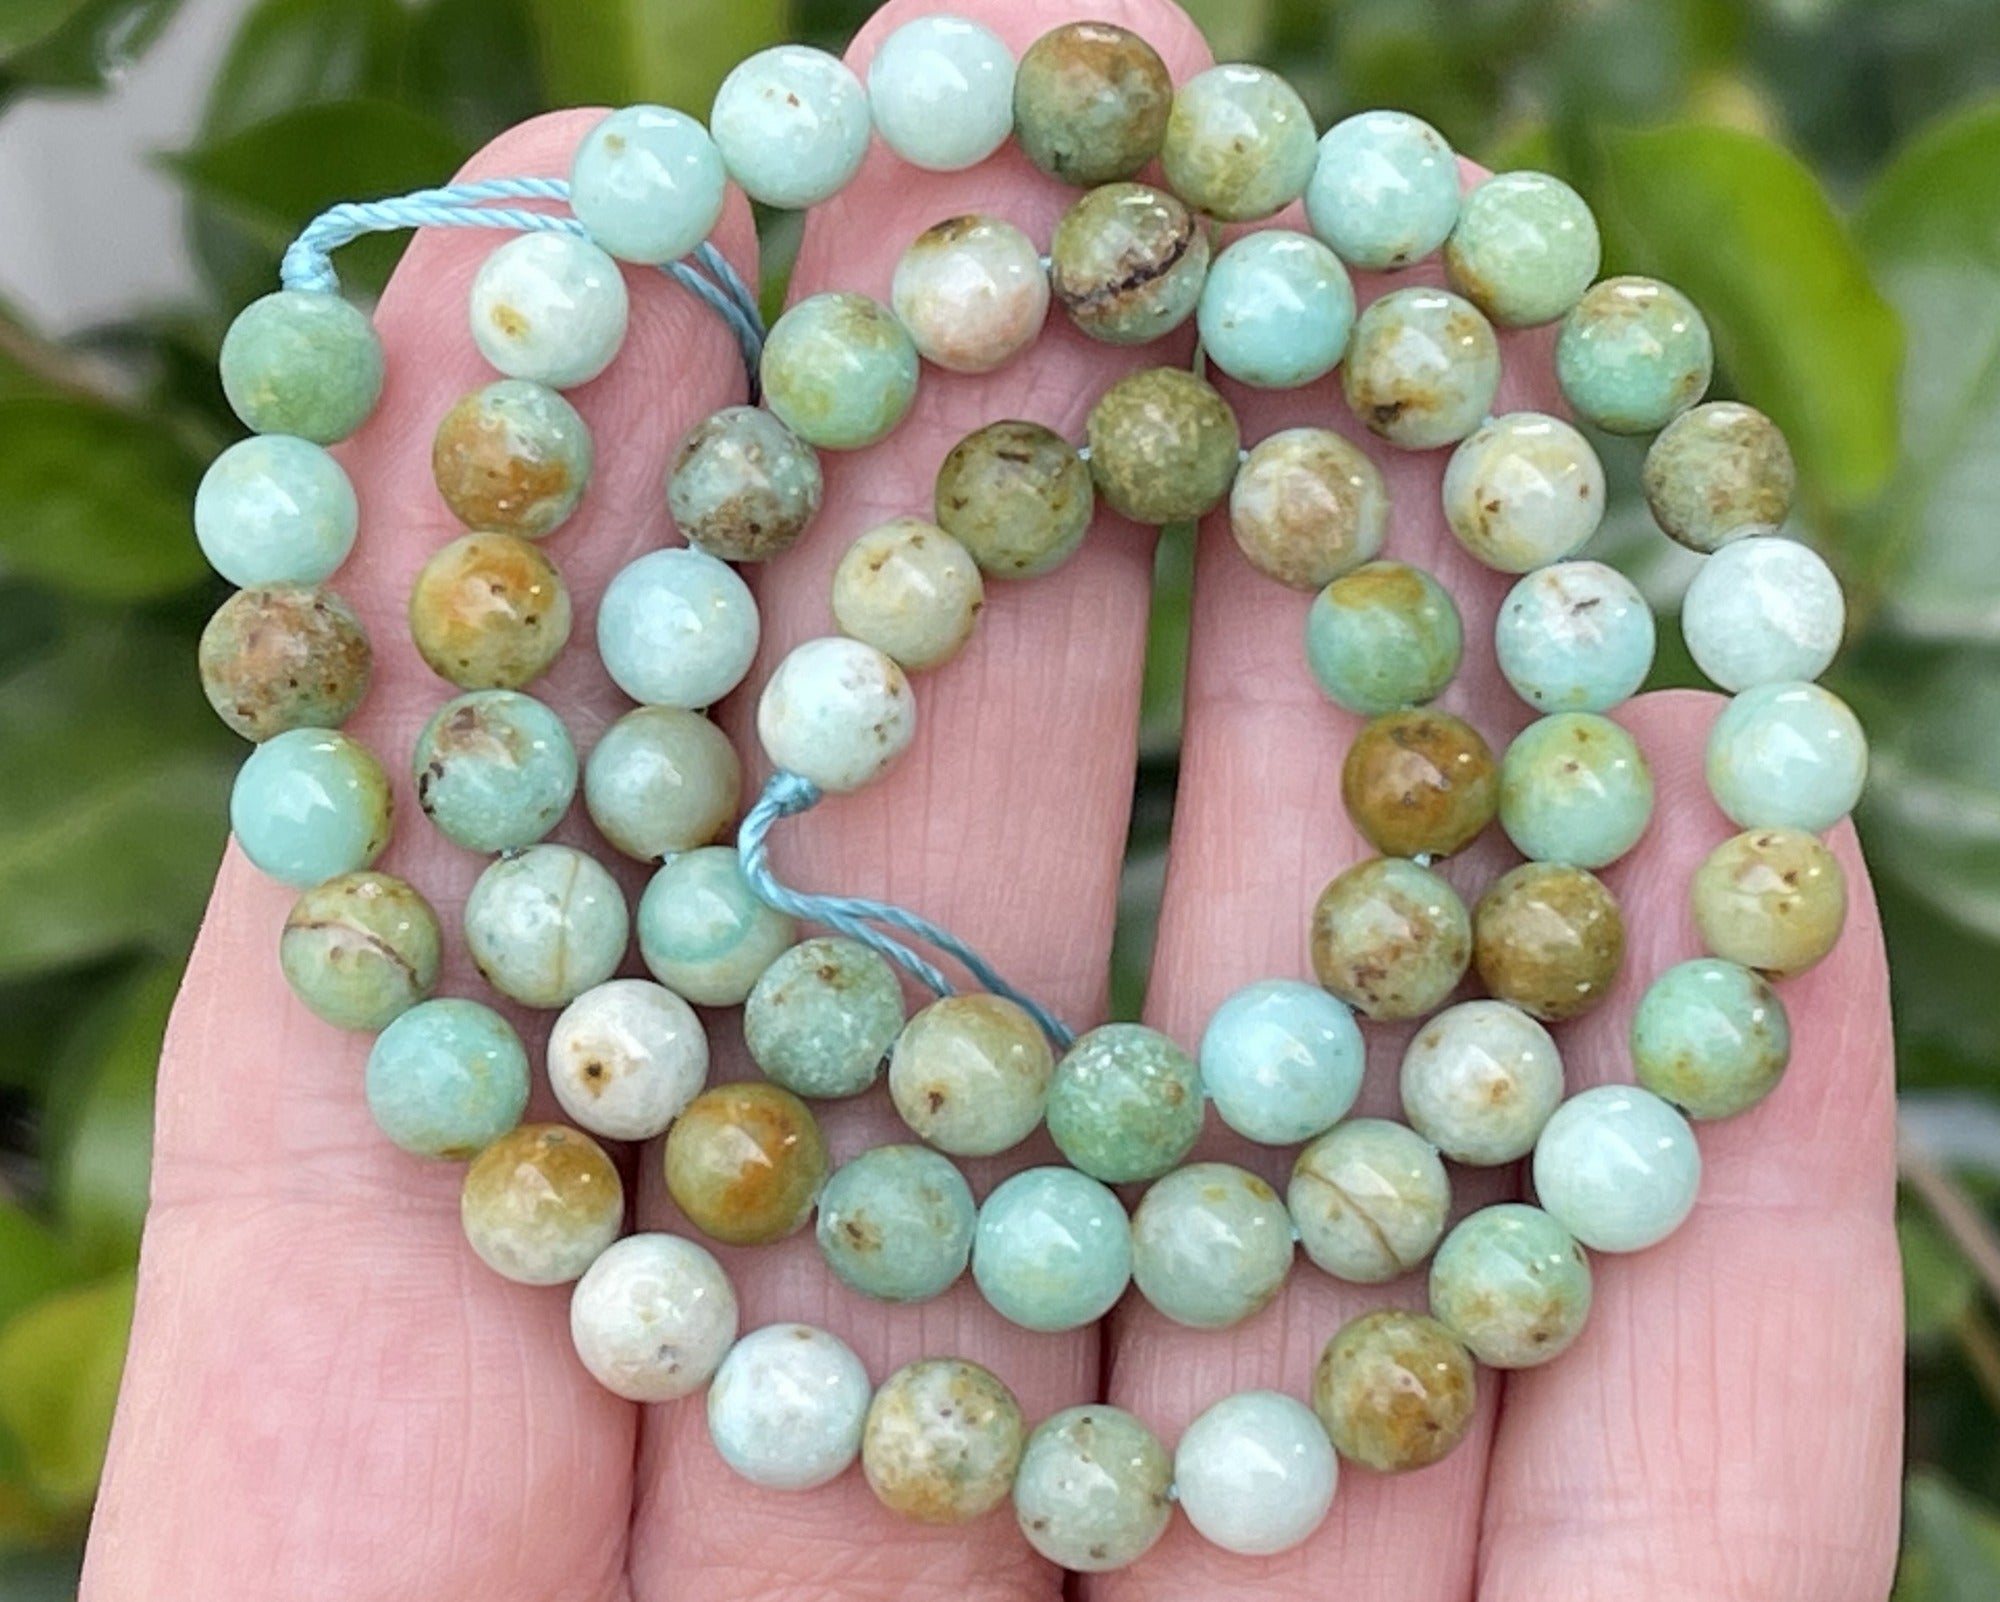 Green Mongolian Turquoise 6mm round natural gemstone beads 15.5" strand